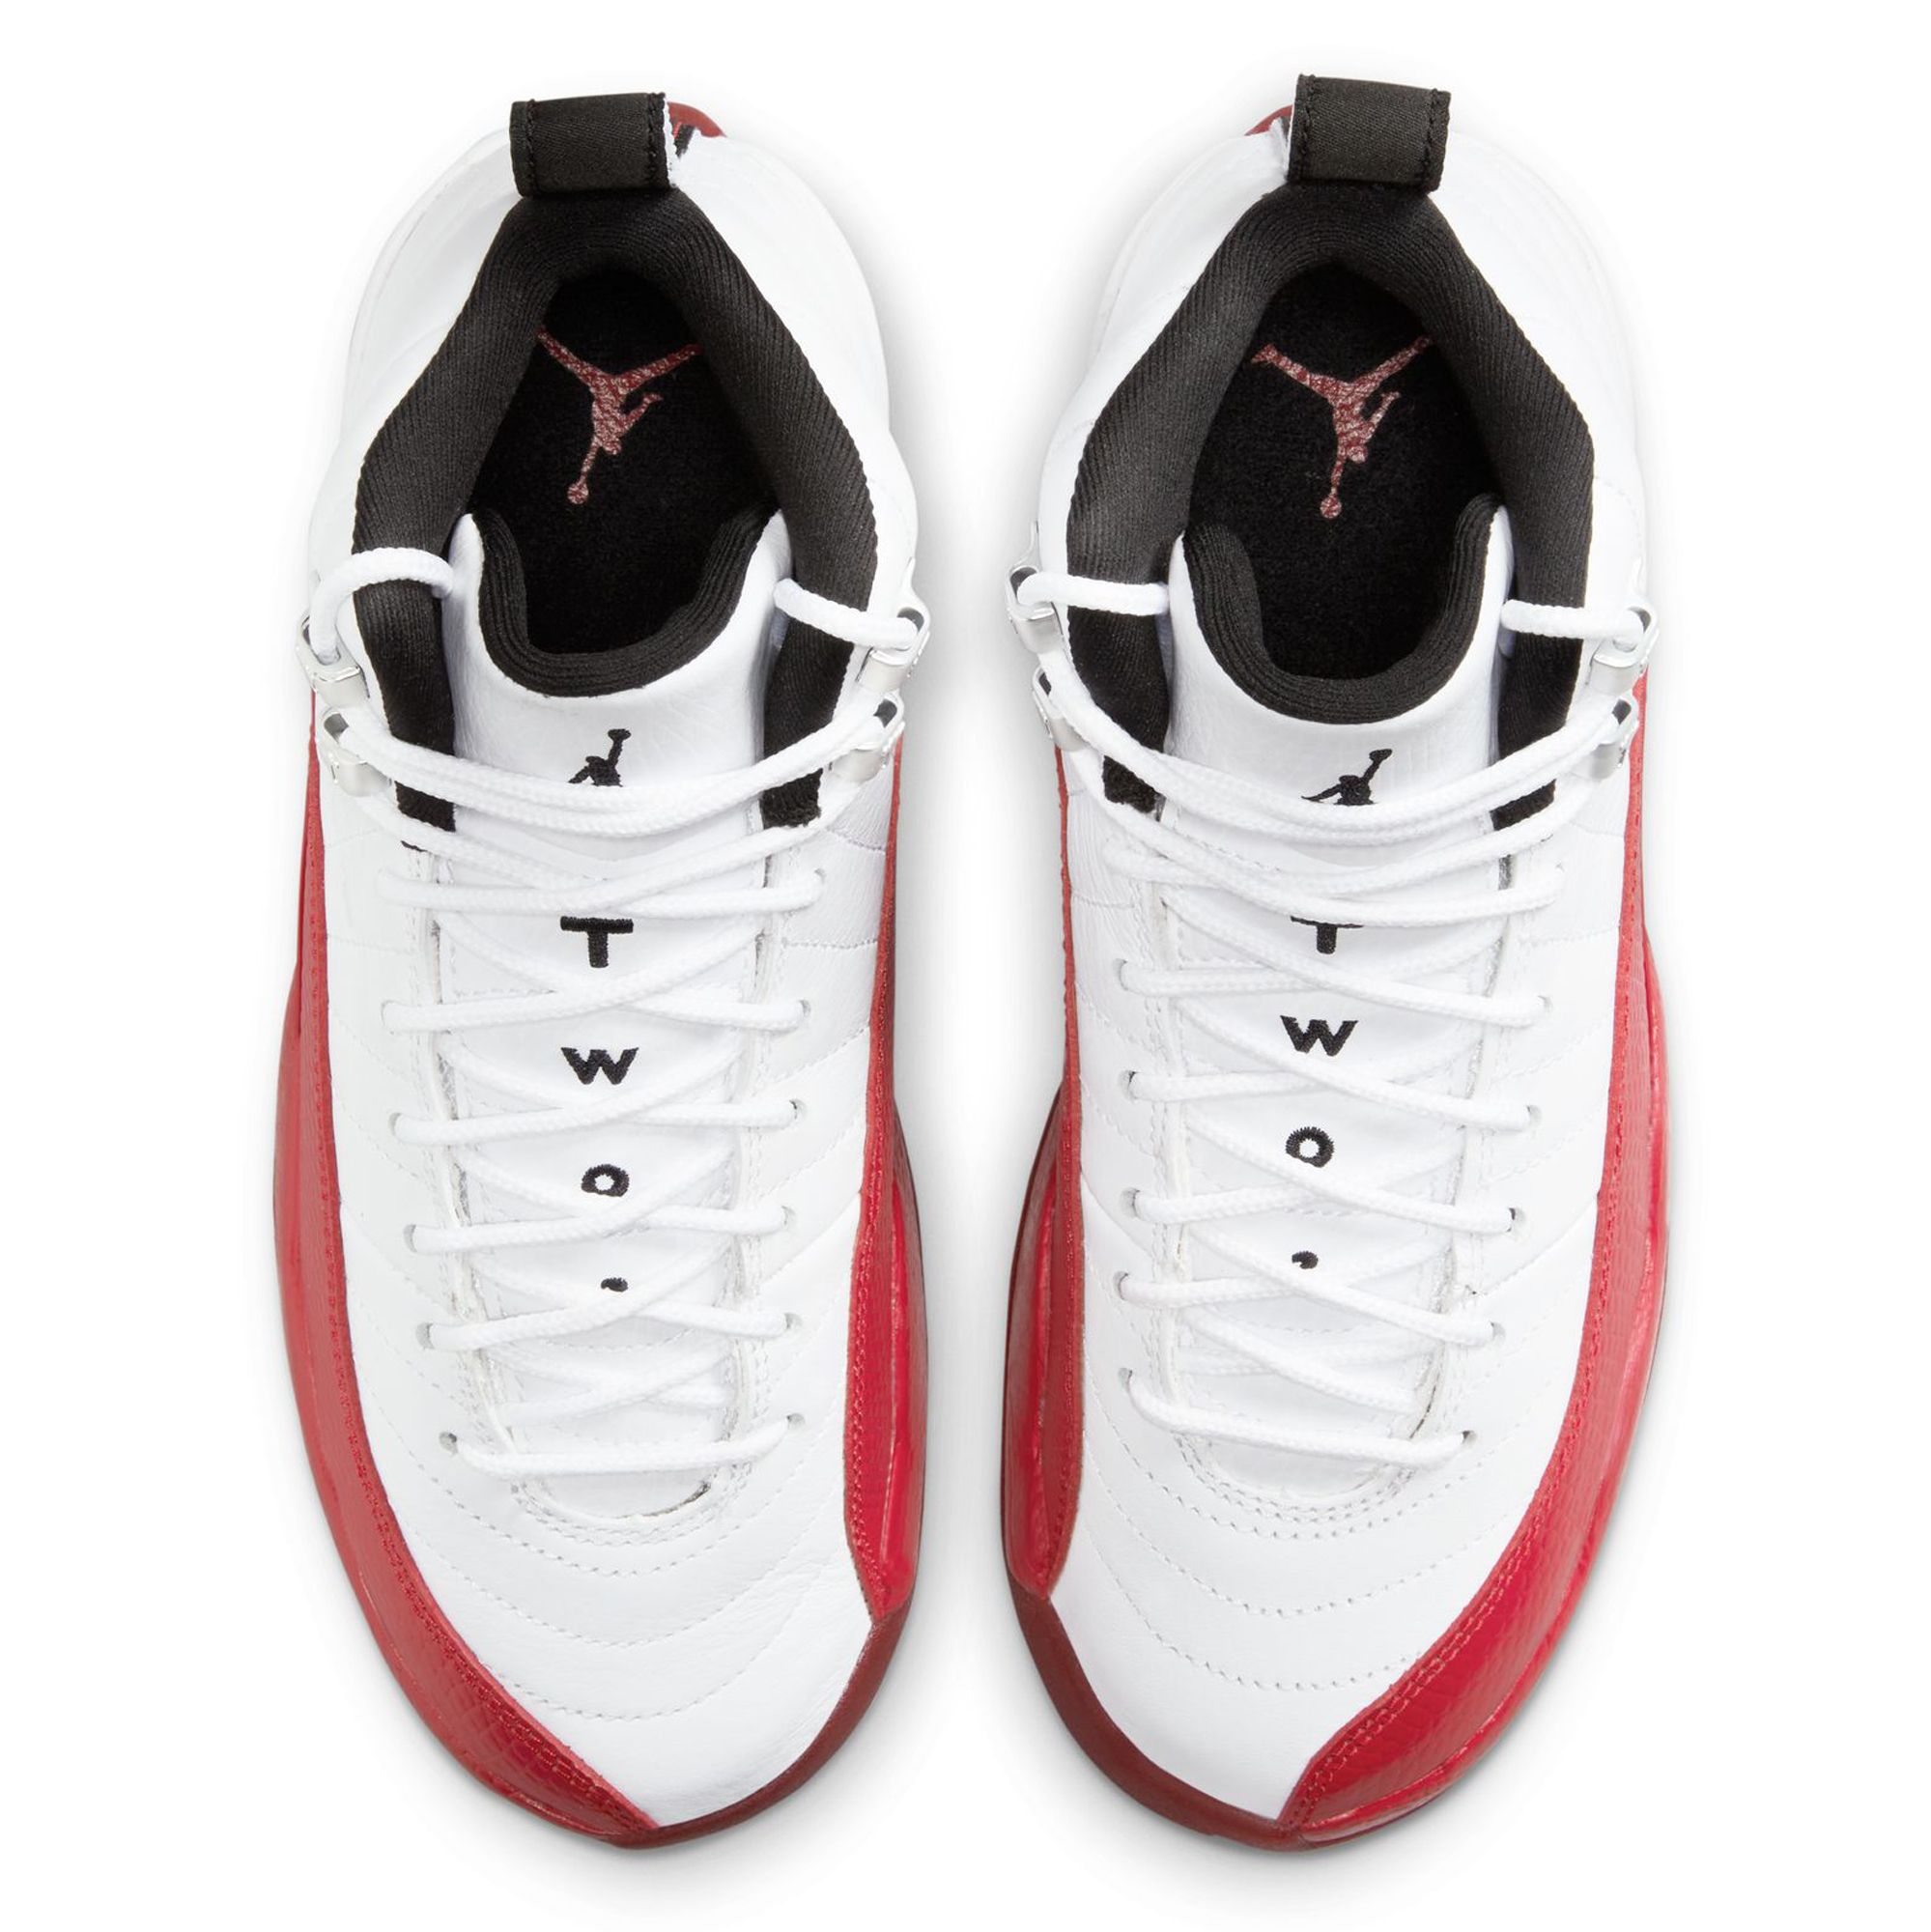 Jordan Air Jordan 12 Retro 'Cherry' Red/White